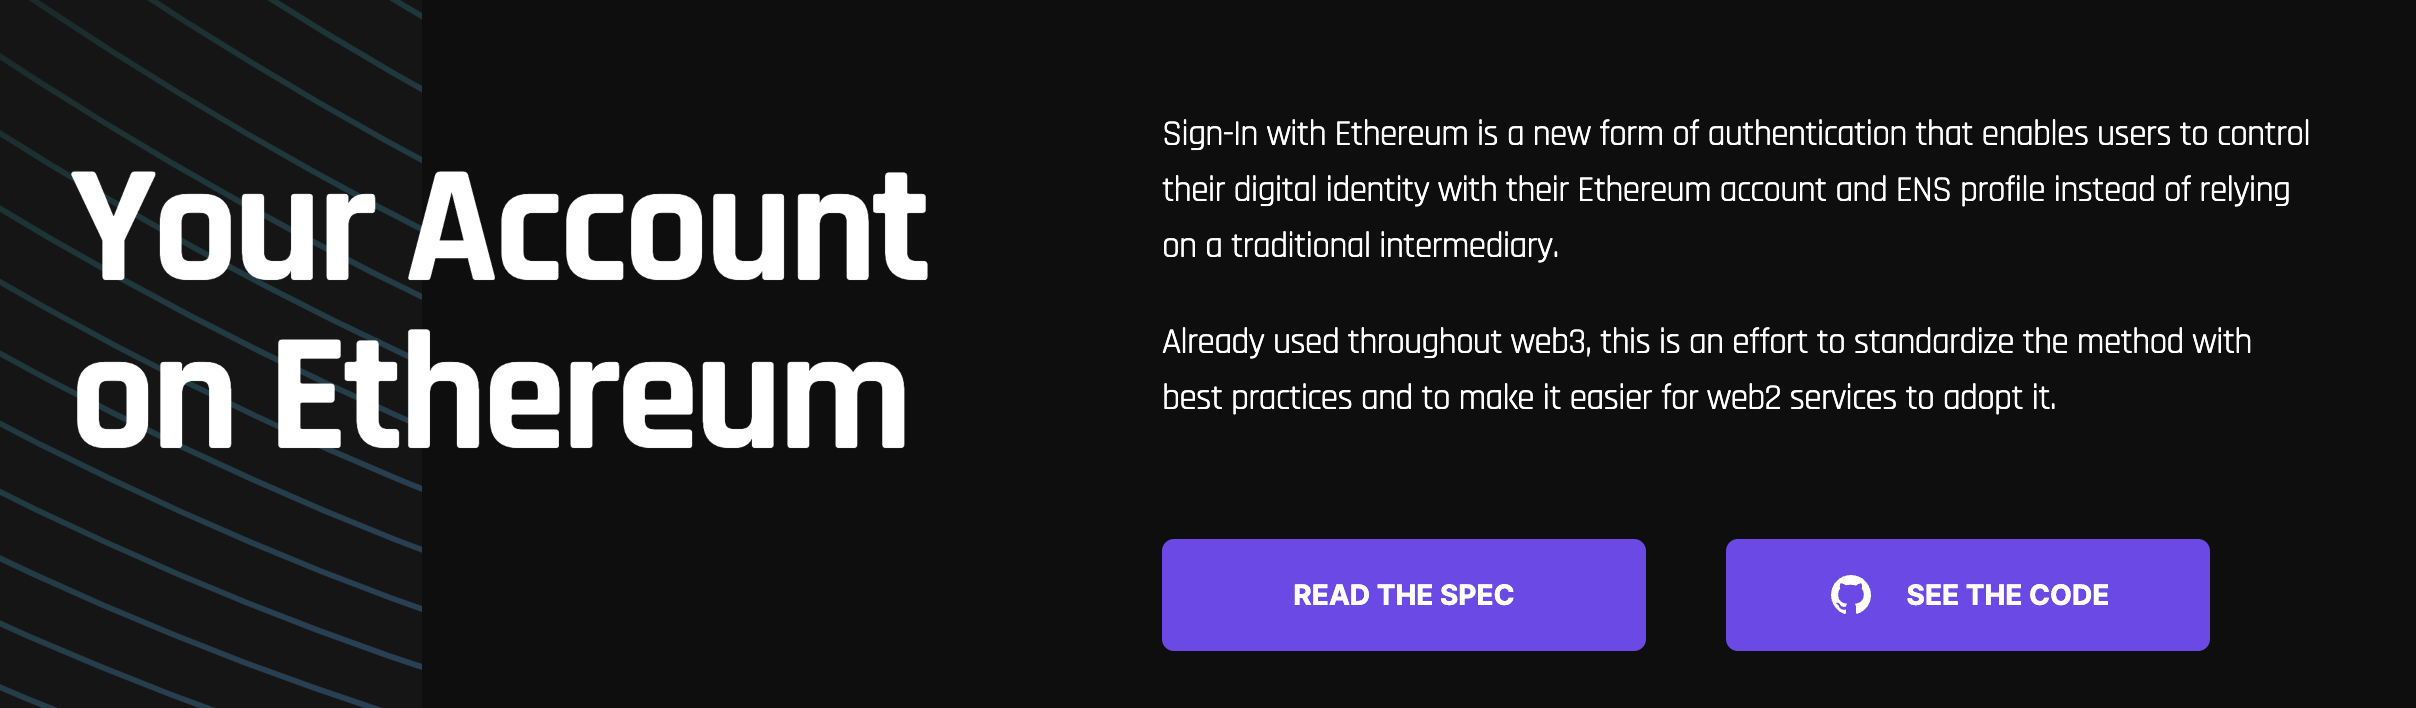 有关Sign-In With Ethereum更多细节, 详见：login.xyz